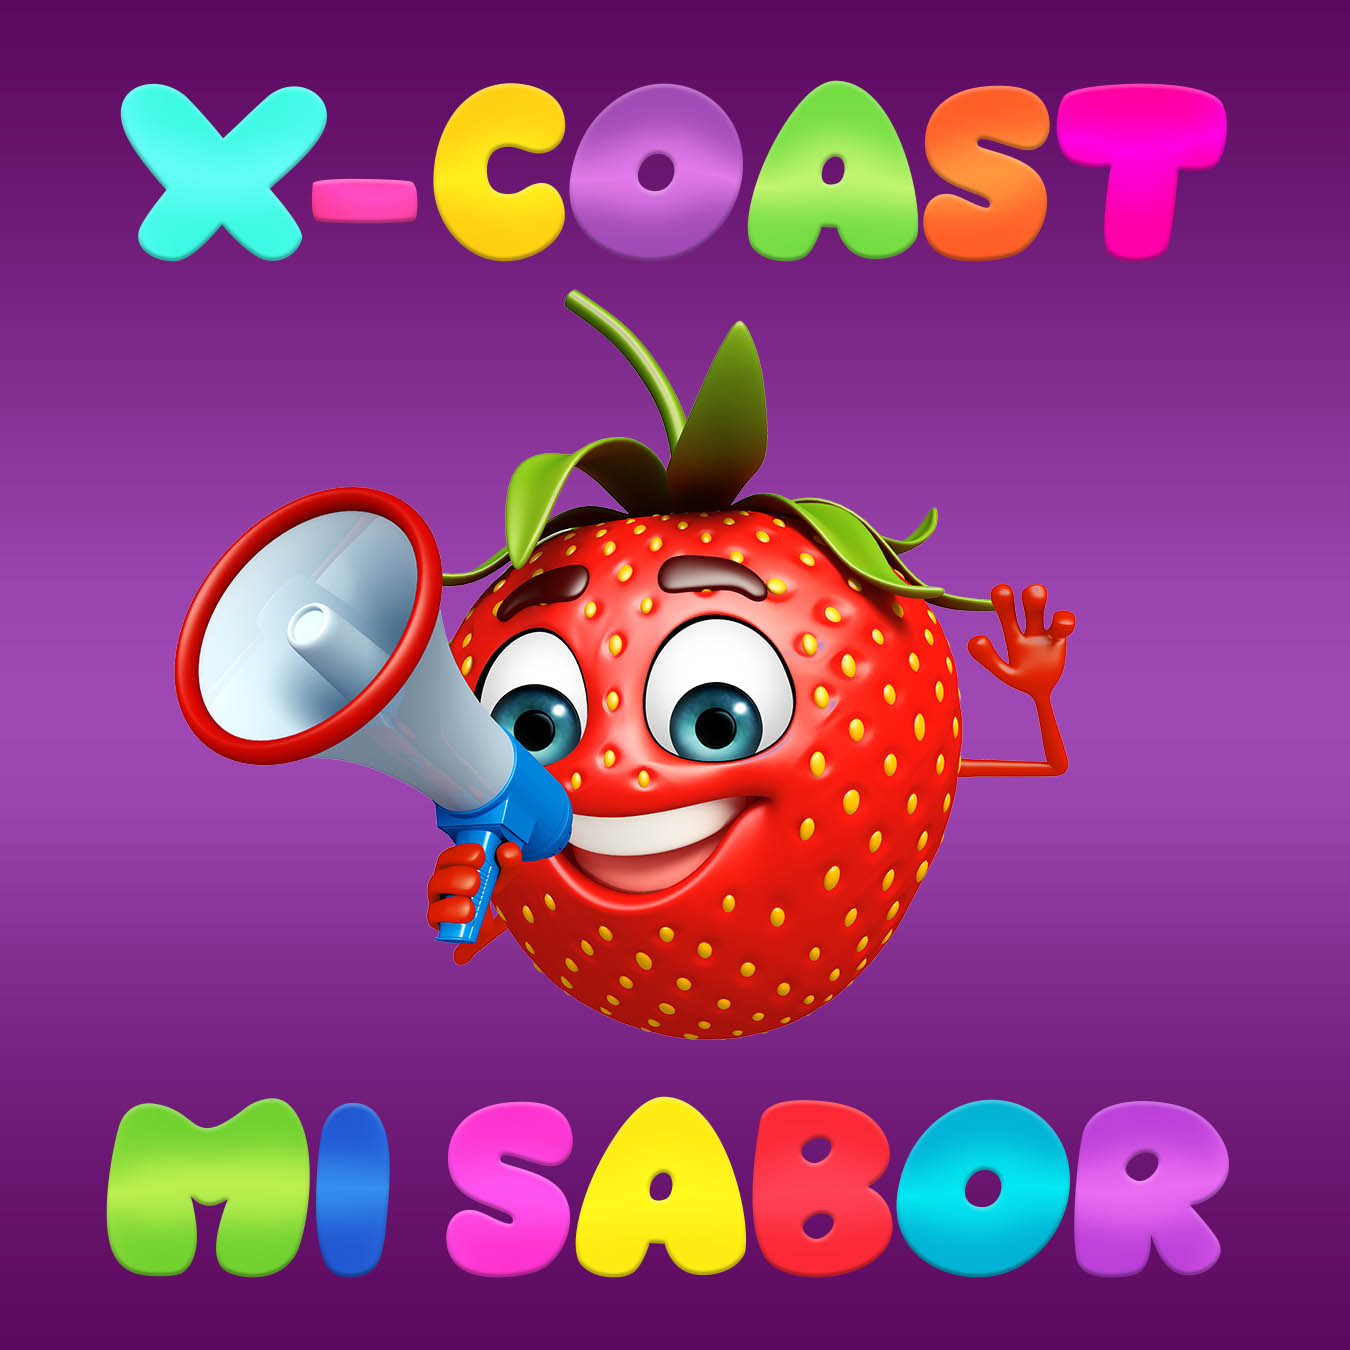 MI SABOR – X-COAST